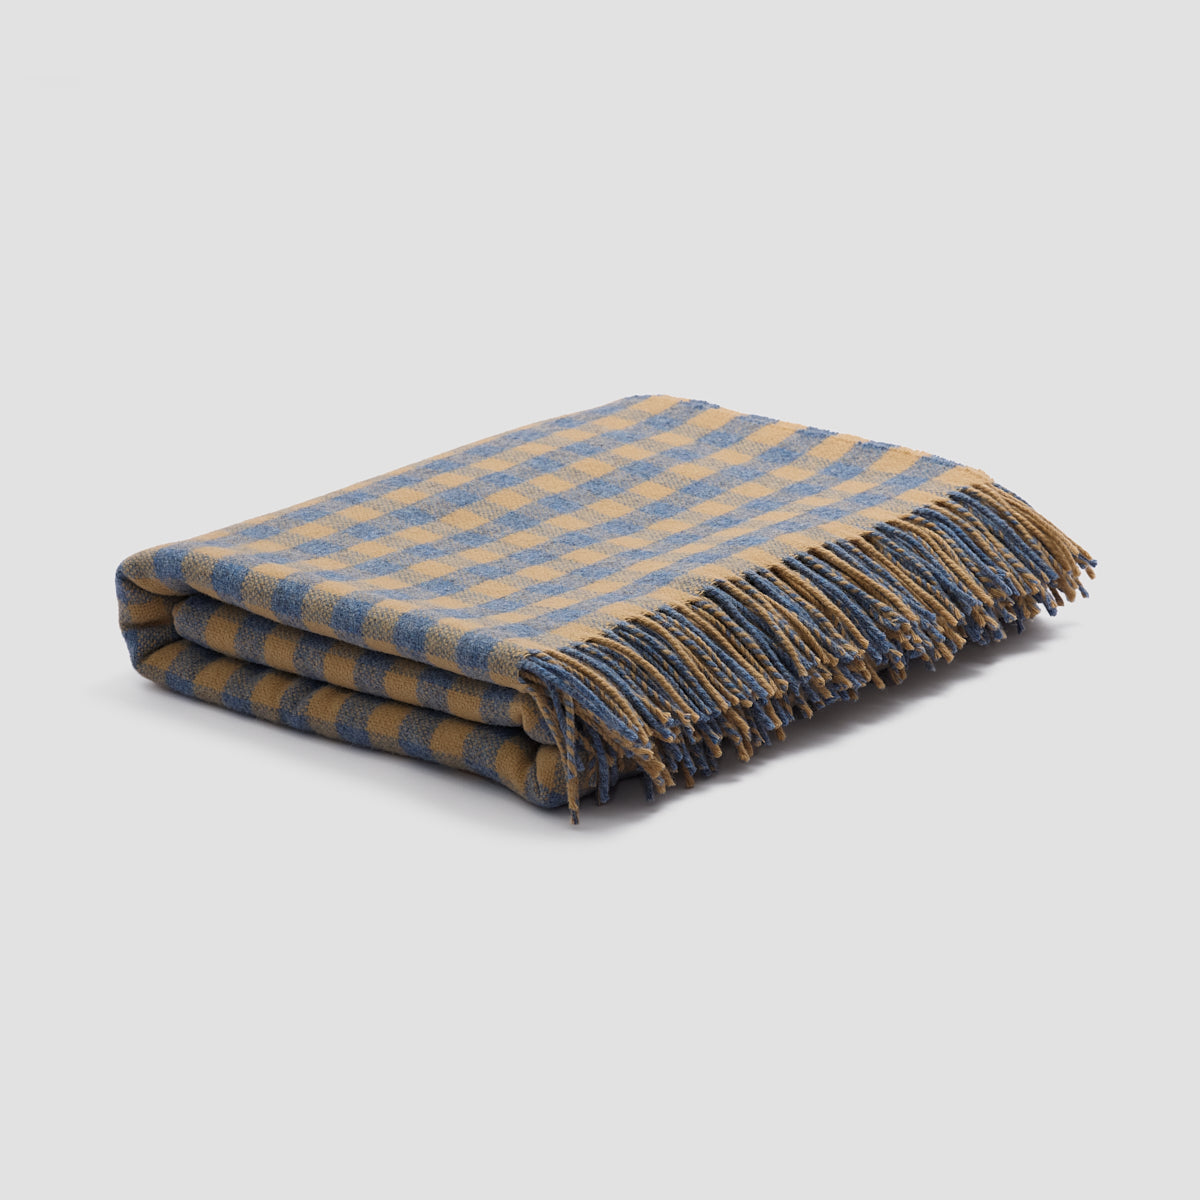 Warm Blue Gingham Wool Blanket - Piglet in Bed